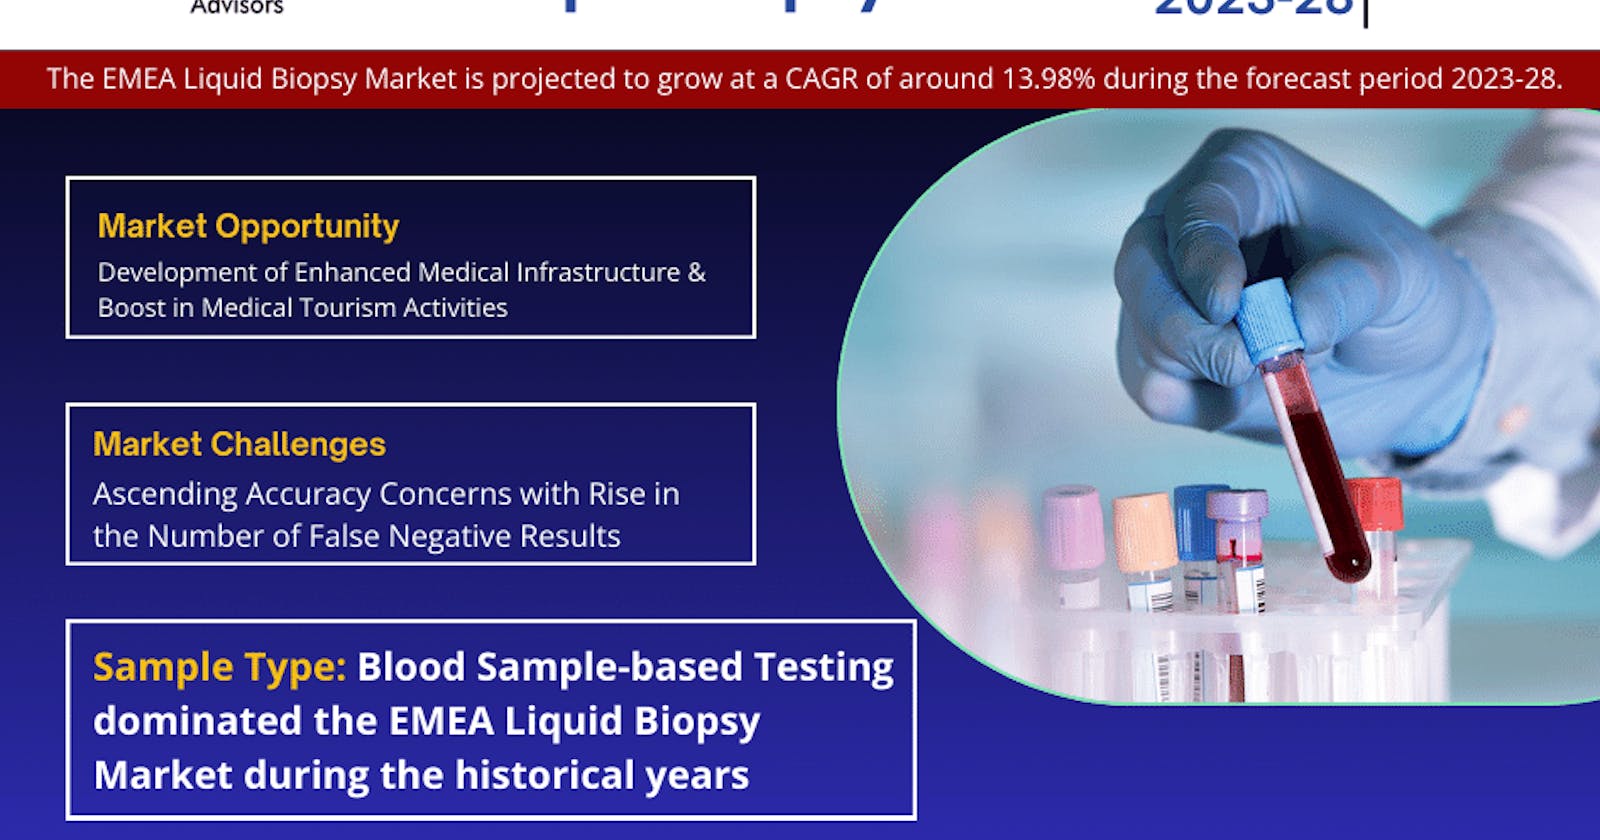 EMEA Liquid Biopsy Market Anticipates Robust 13.98% CAGR for 2023-28